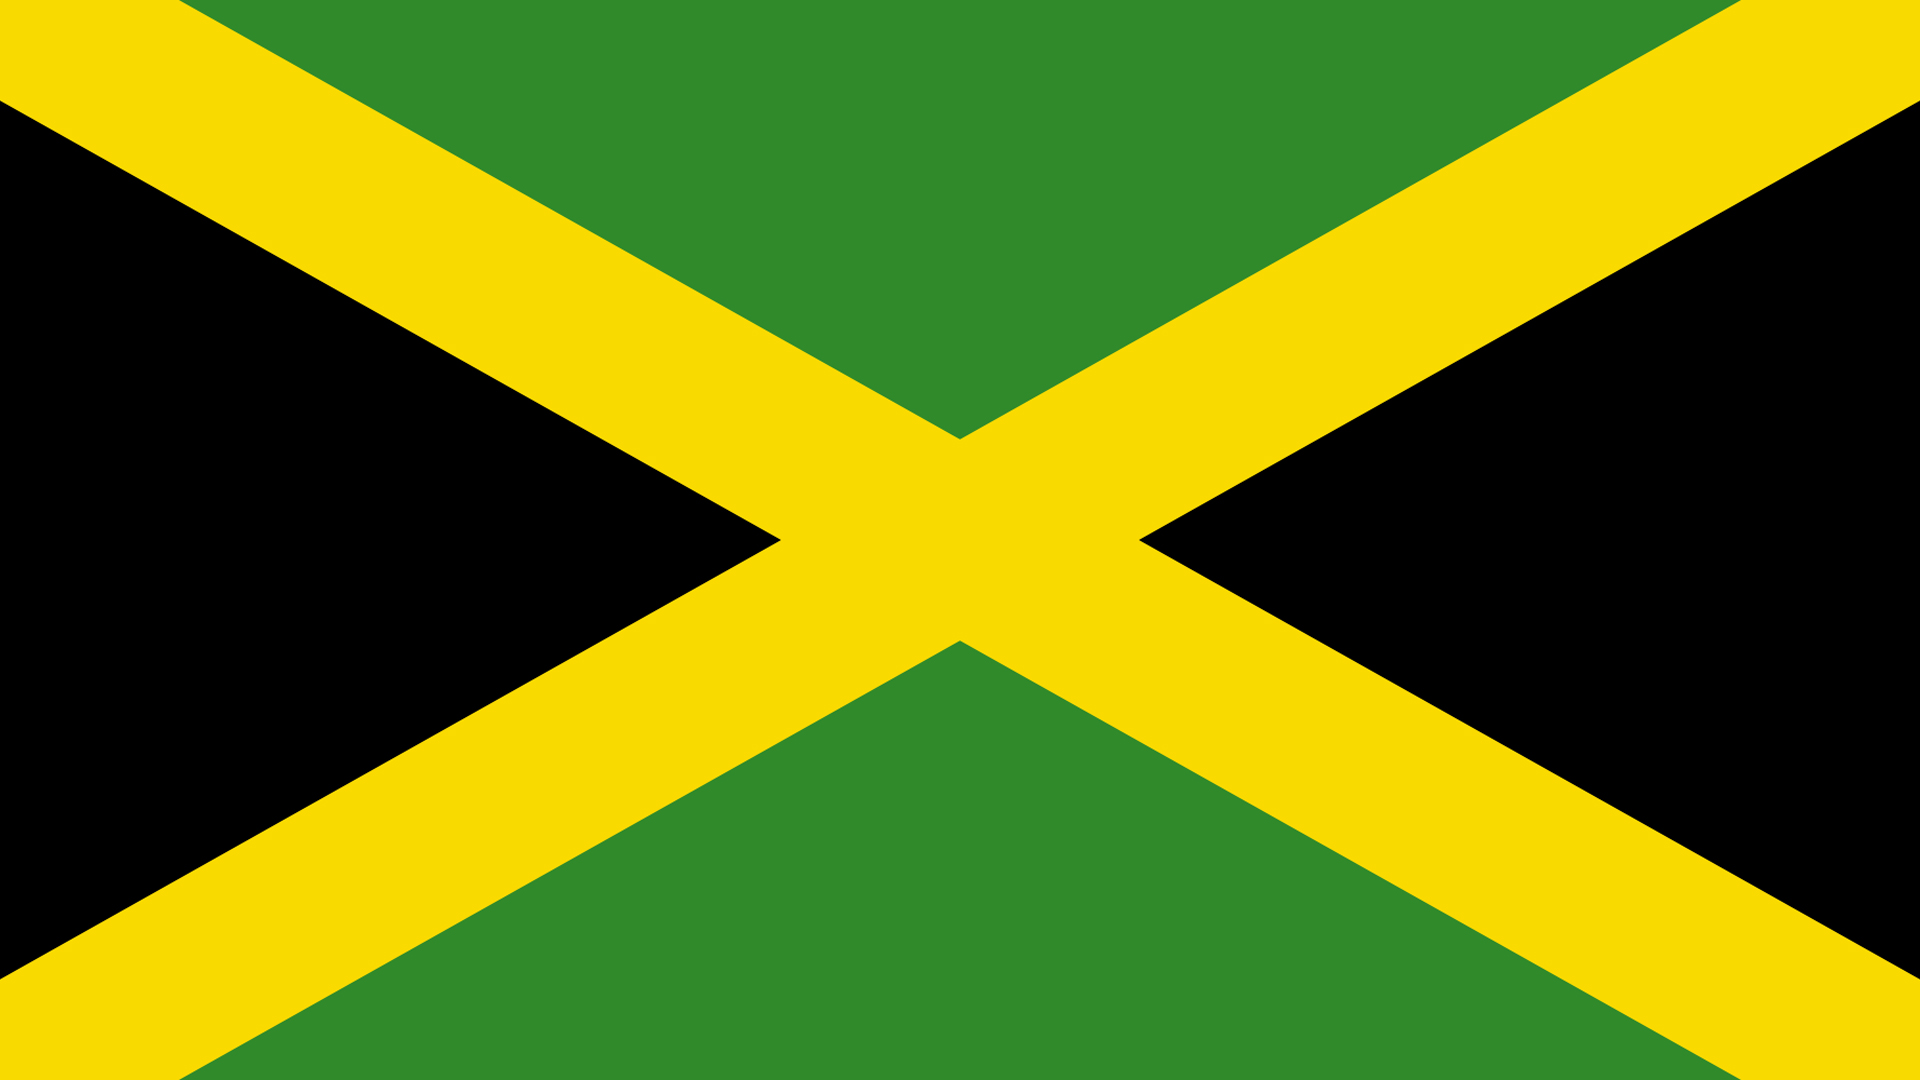 Jamaica Flag Wallpaper High Definition High Quality Widescreen